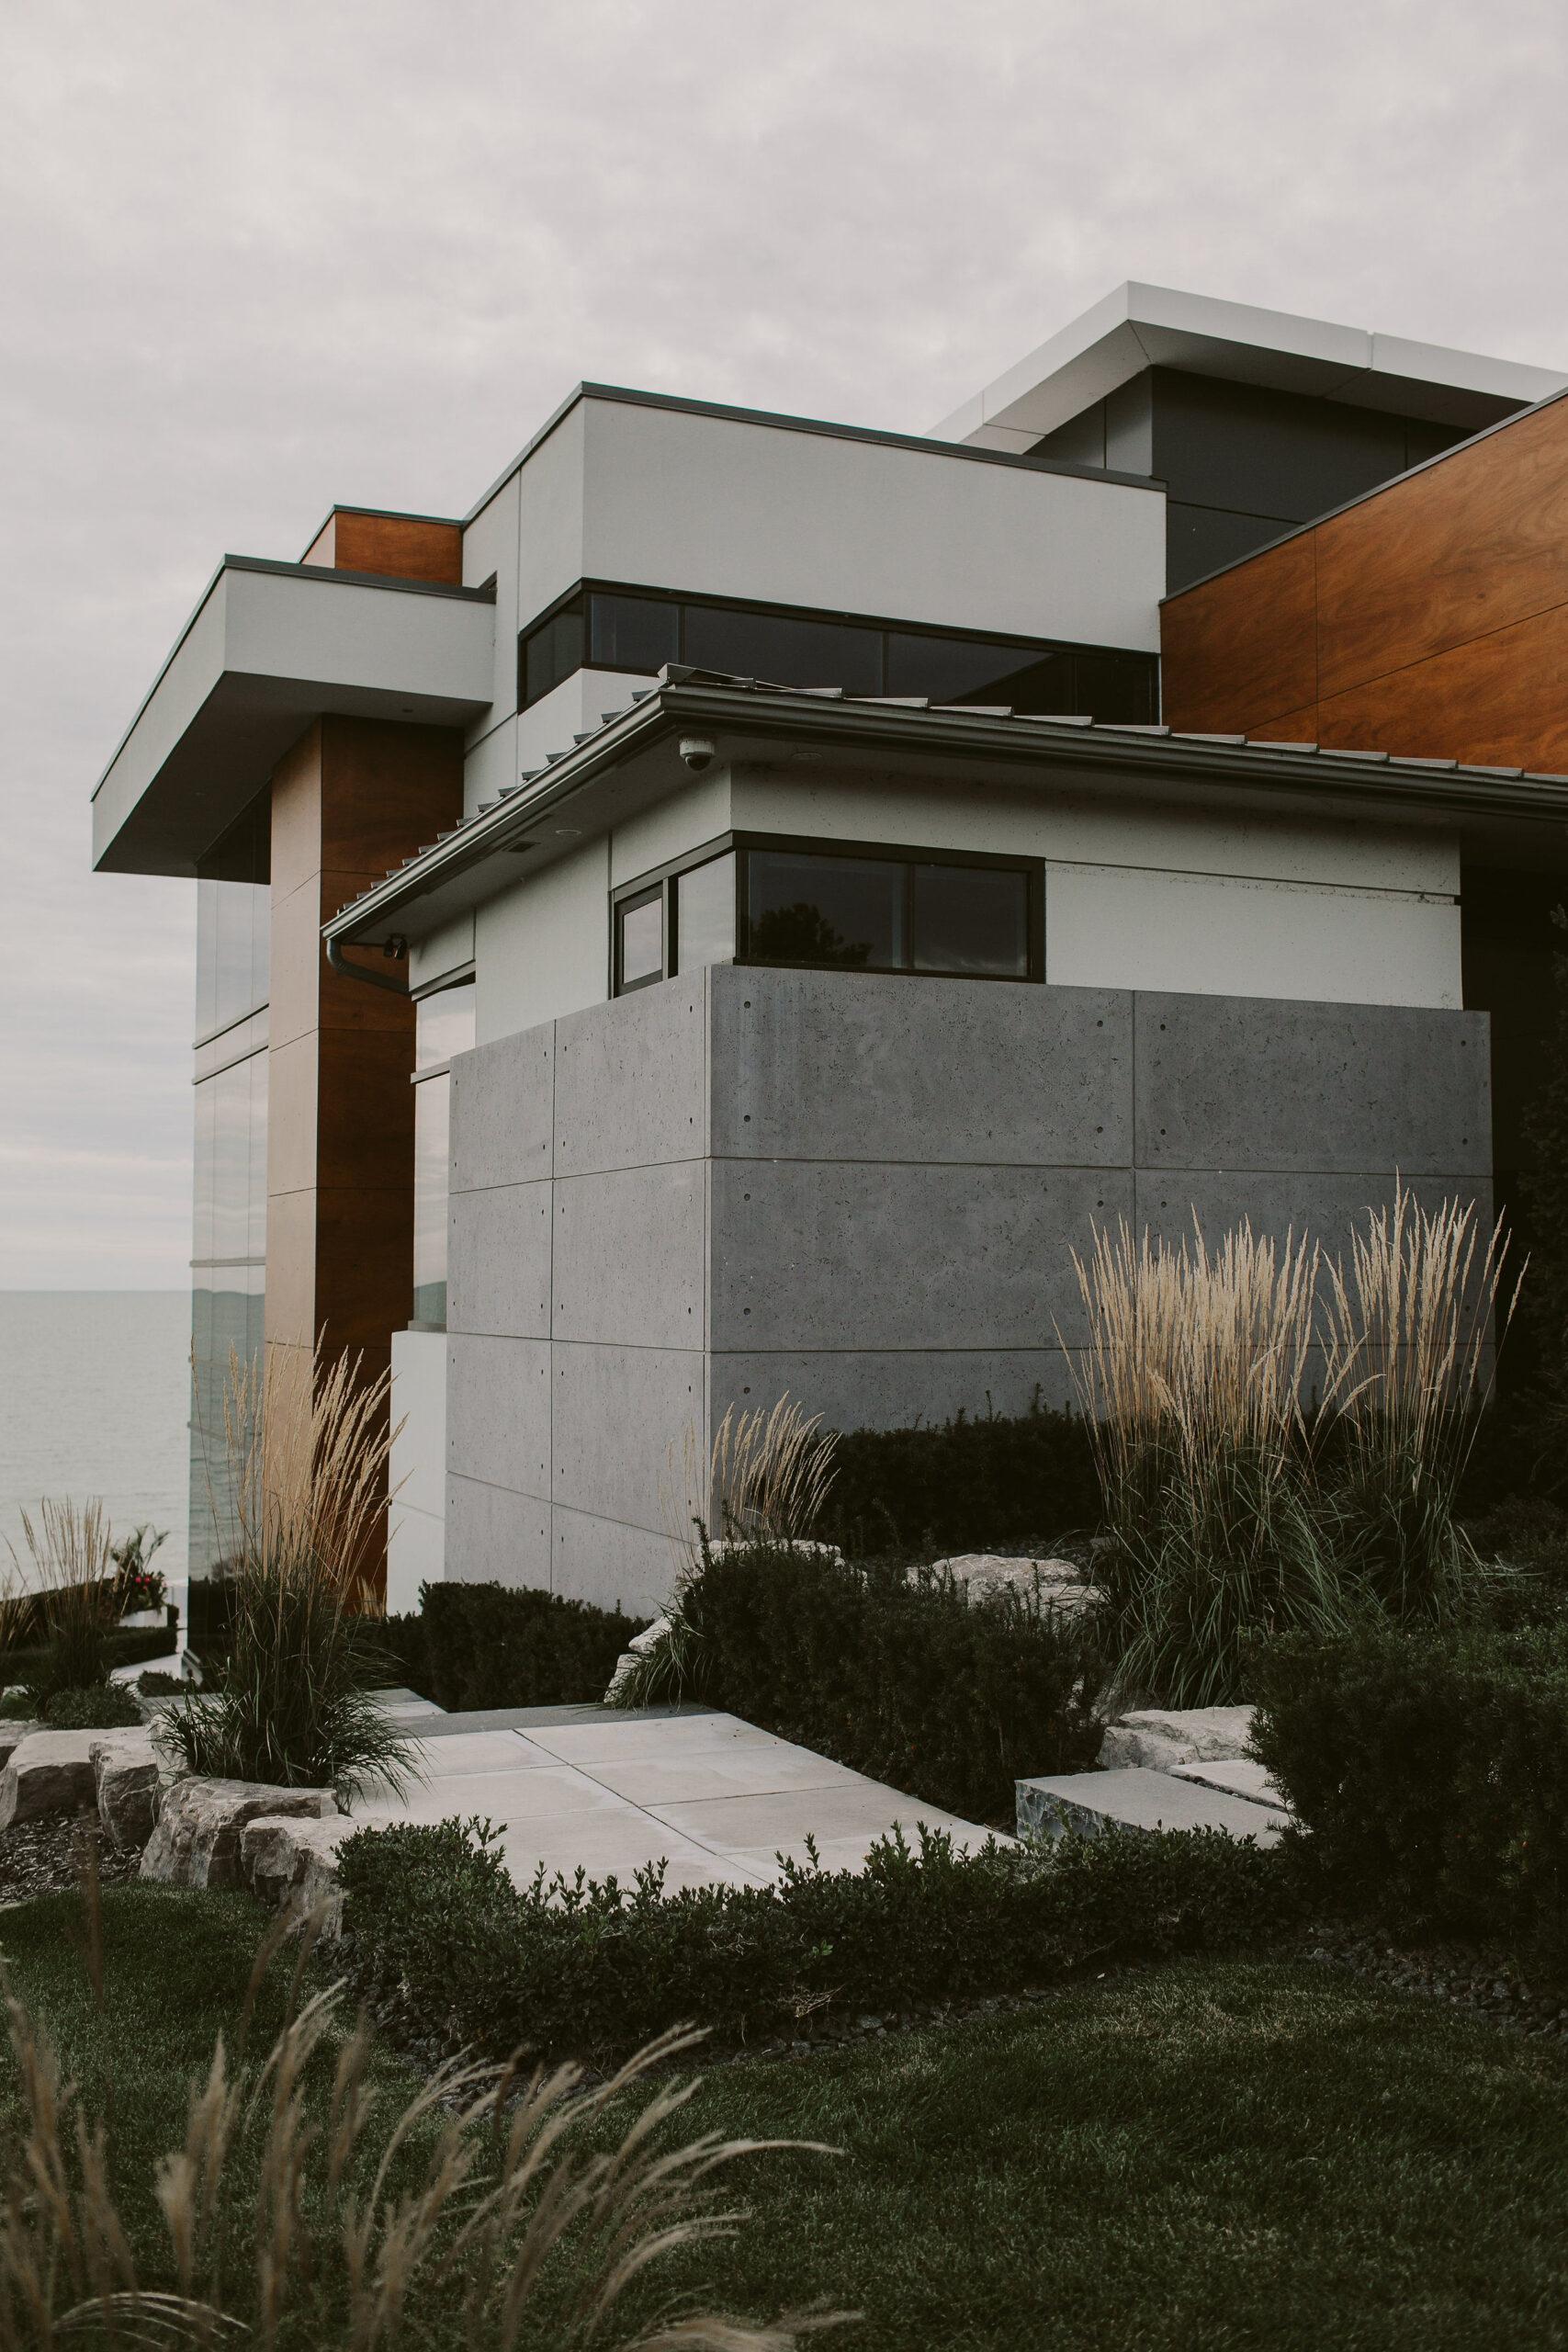 Dekko’s lightweight concrete cladding on the exterior of a home.